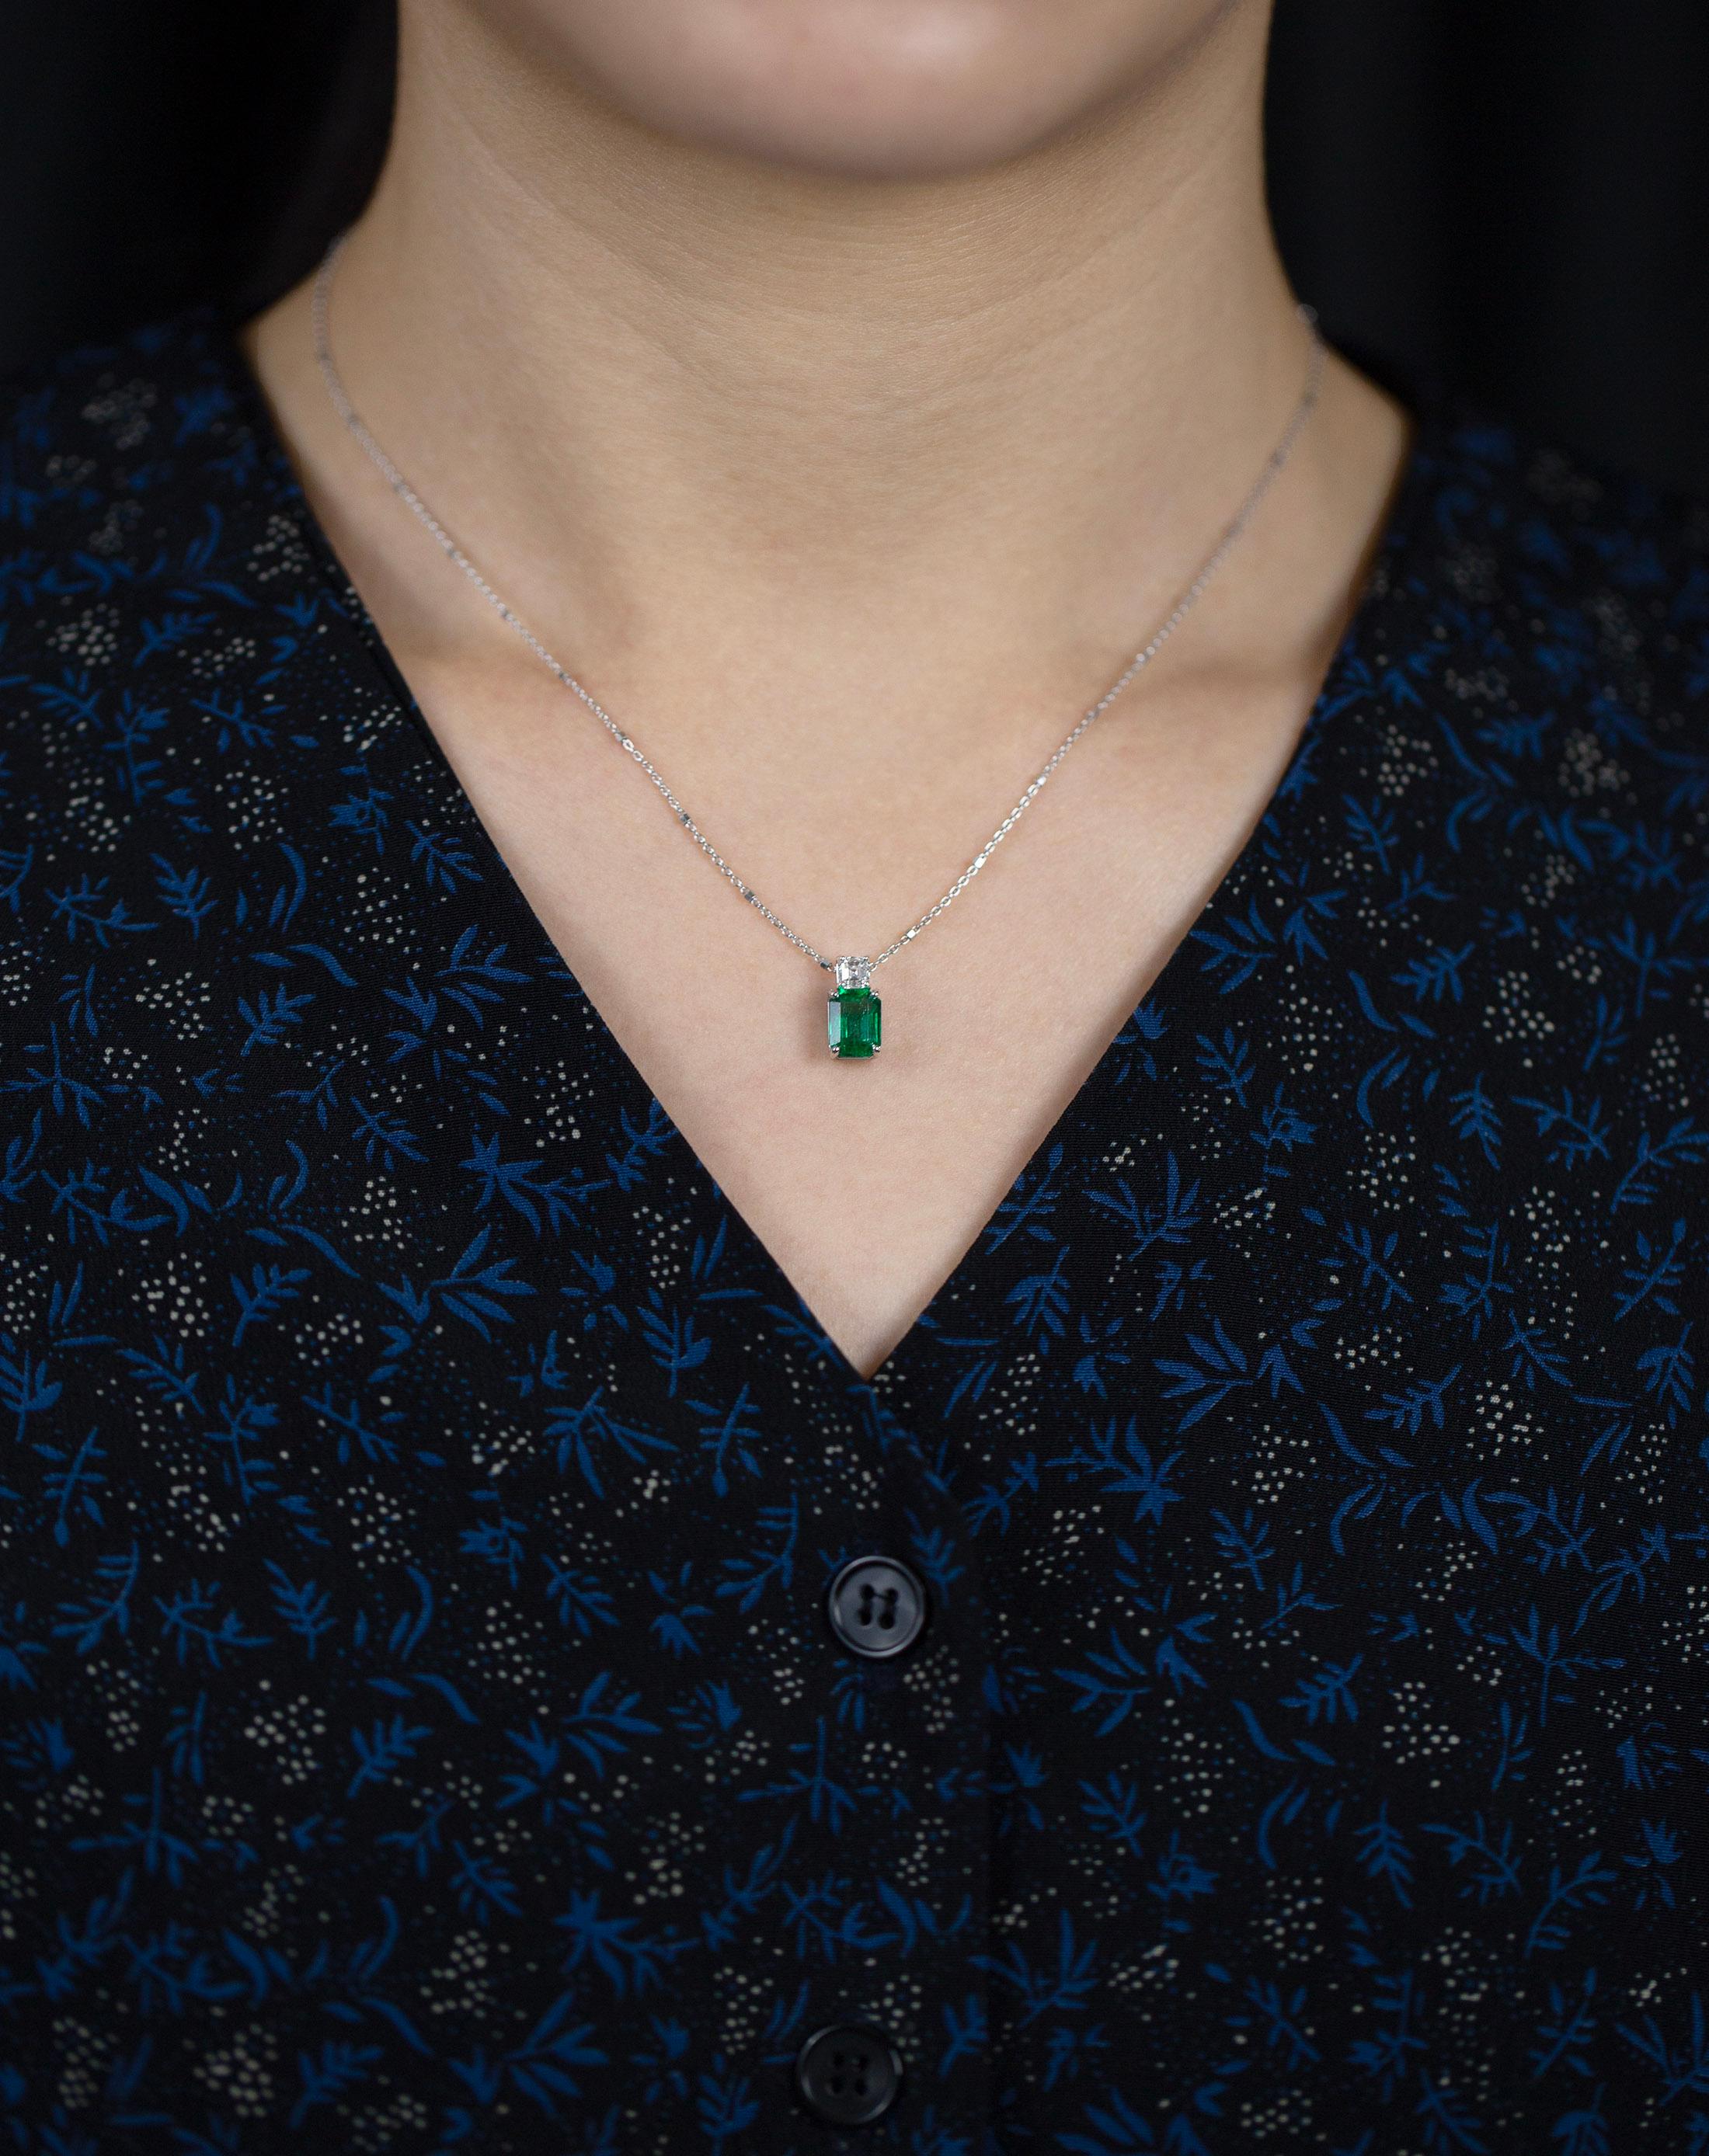 Mixed Cut Roman Malakov 1.27 Carat Emerald Cut Green Emerald and Diamond Pendant Necklace For Sale